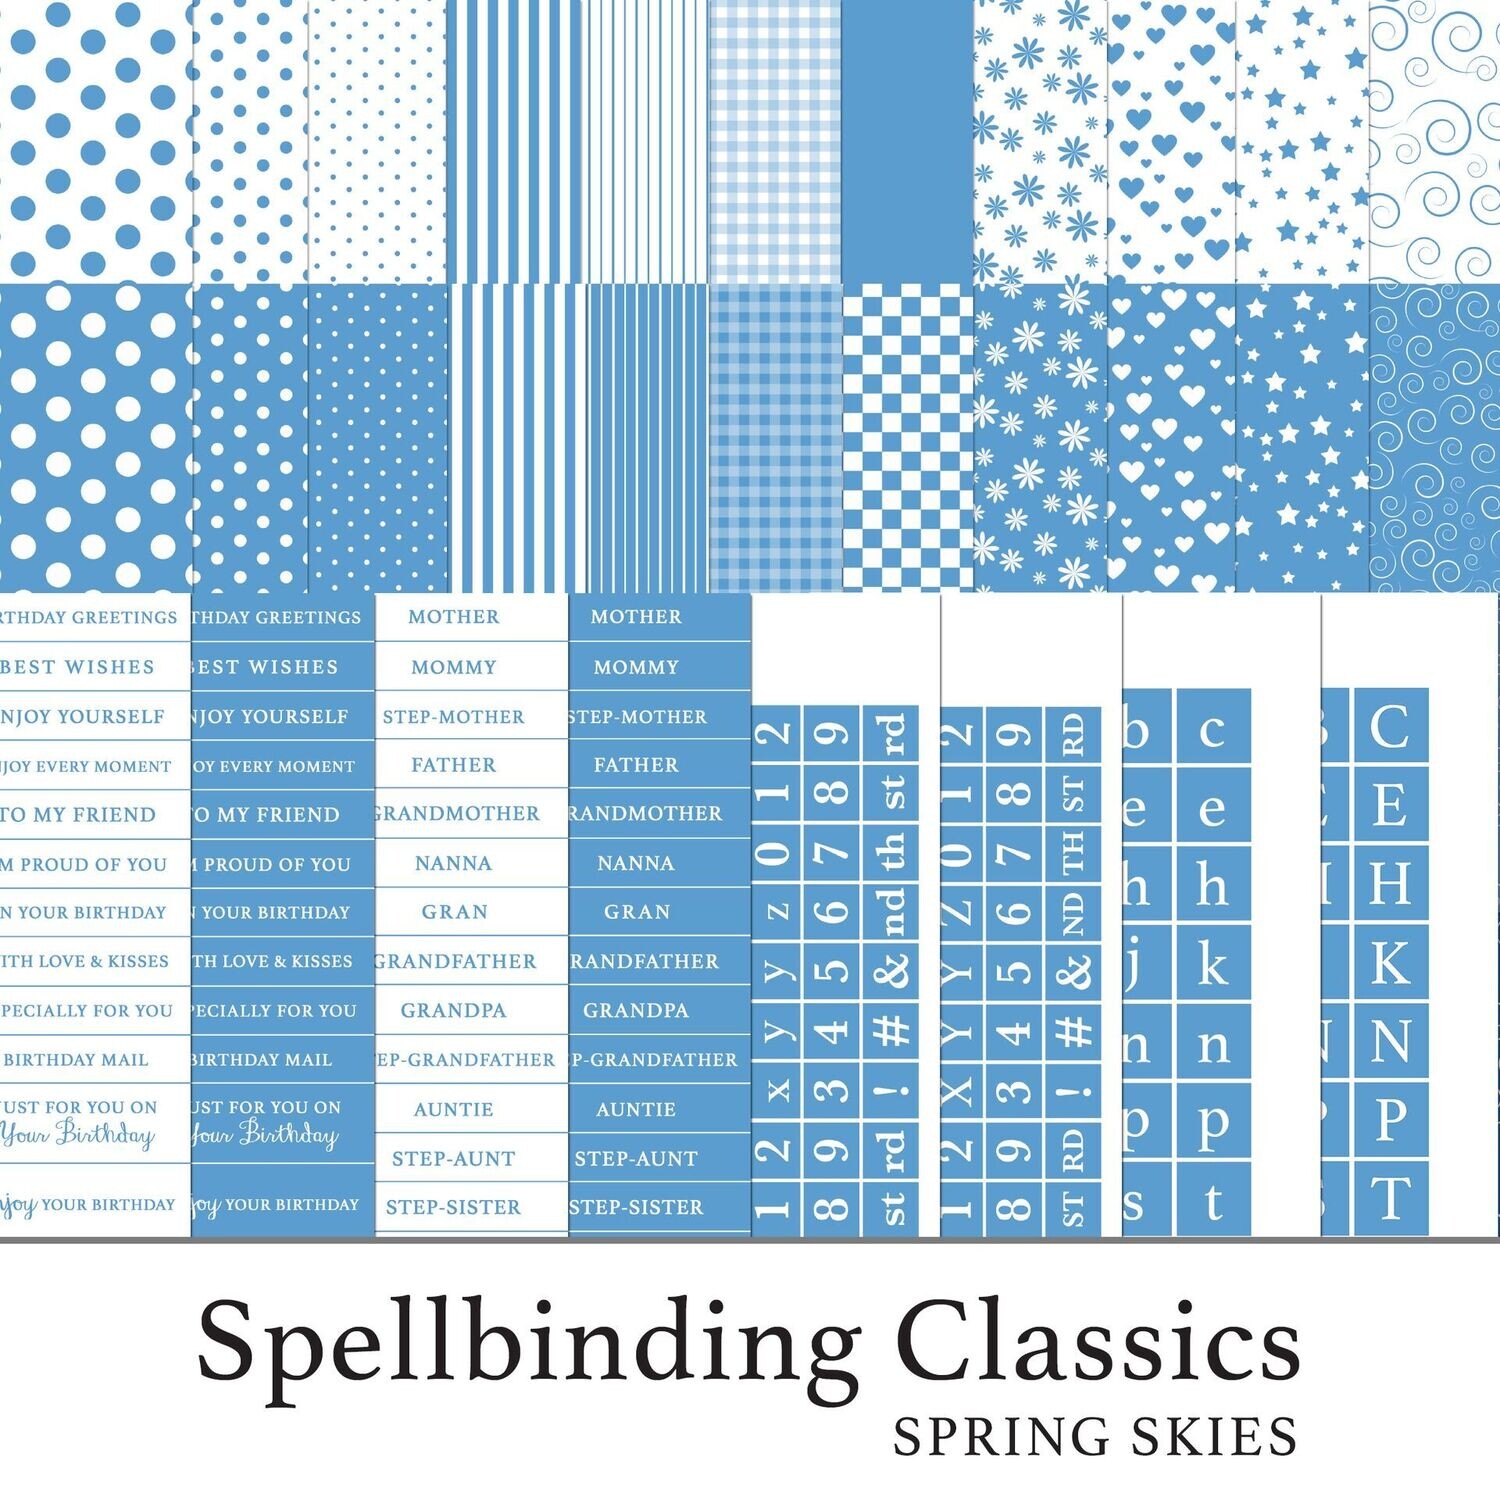 Spellbinding Classics Blues Spring Skies Digital Kit